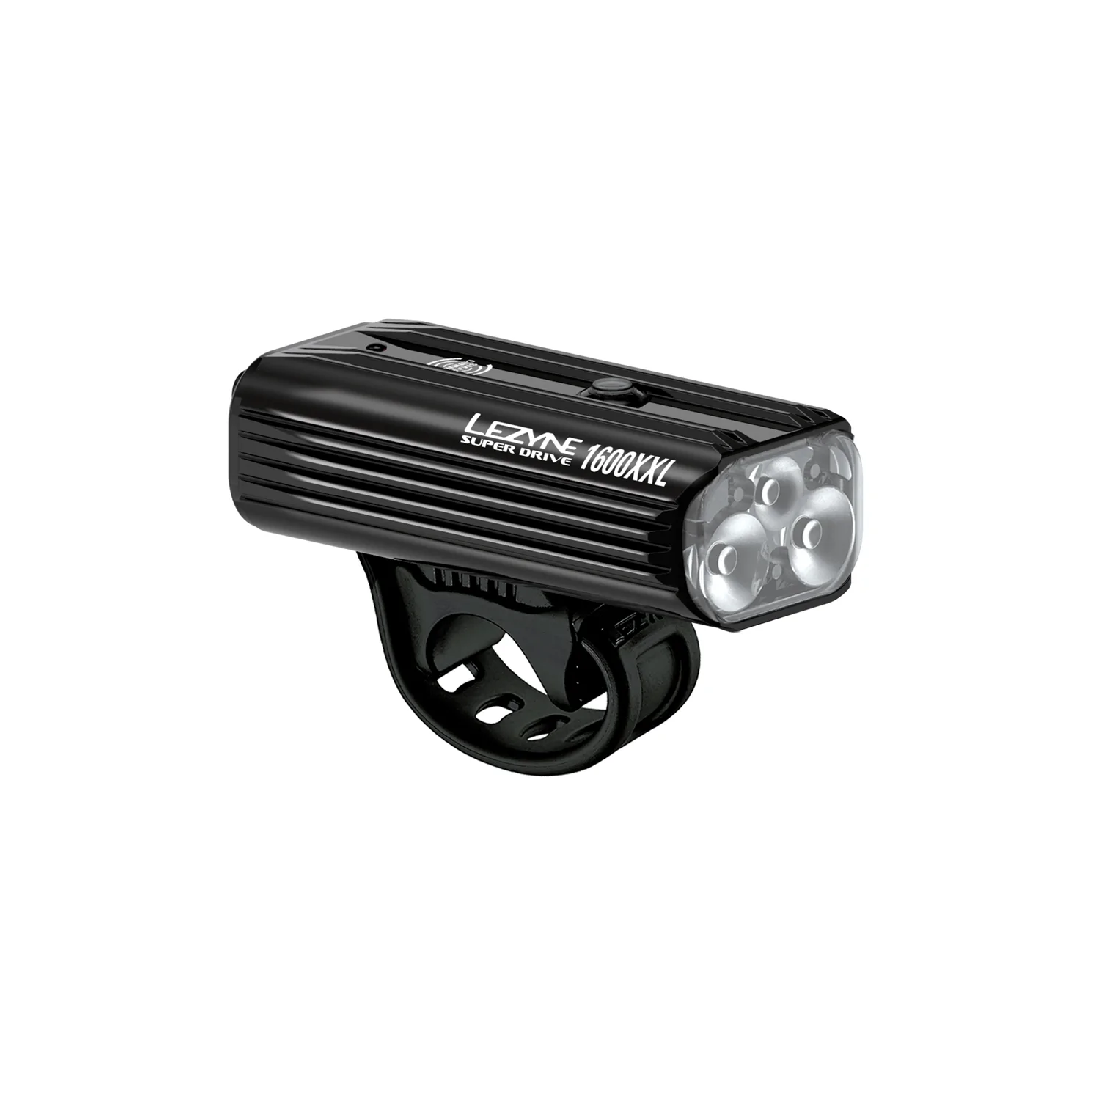 Lezyne Light Super Drive Front 1600 Lumens